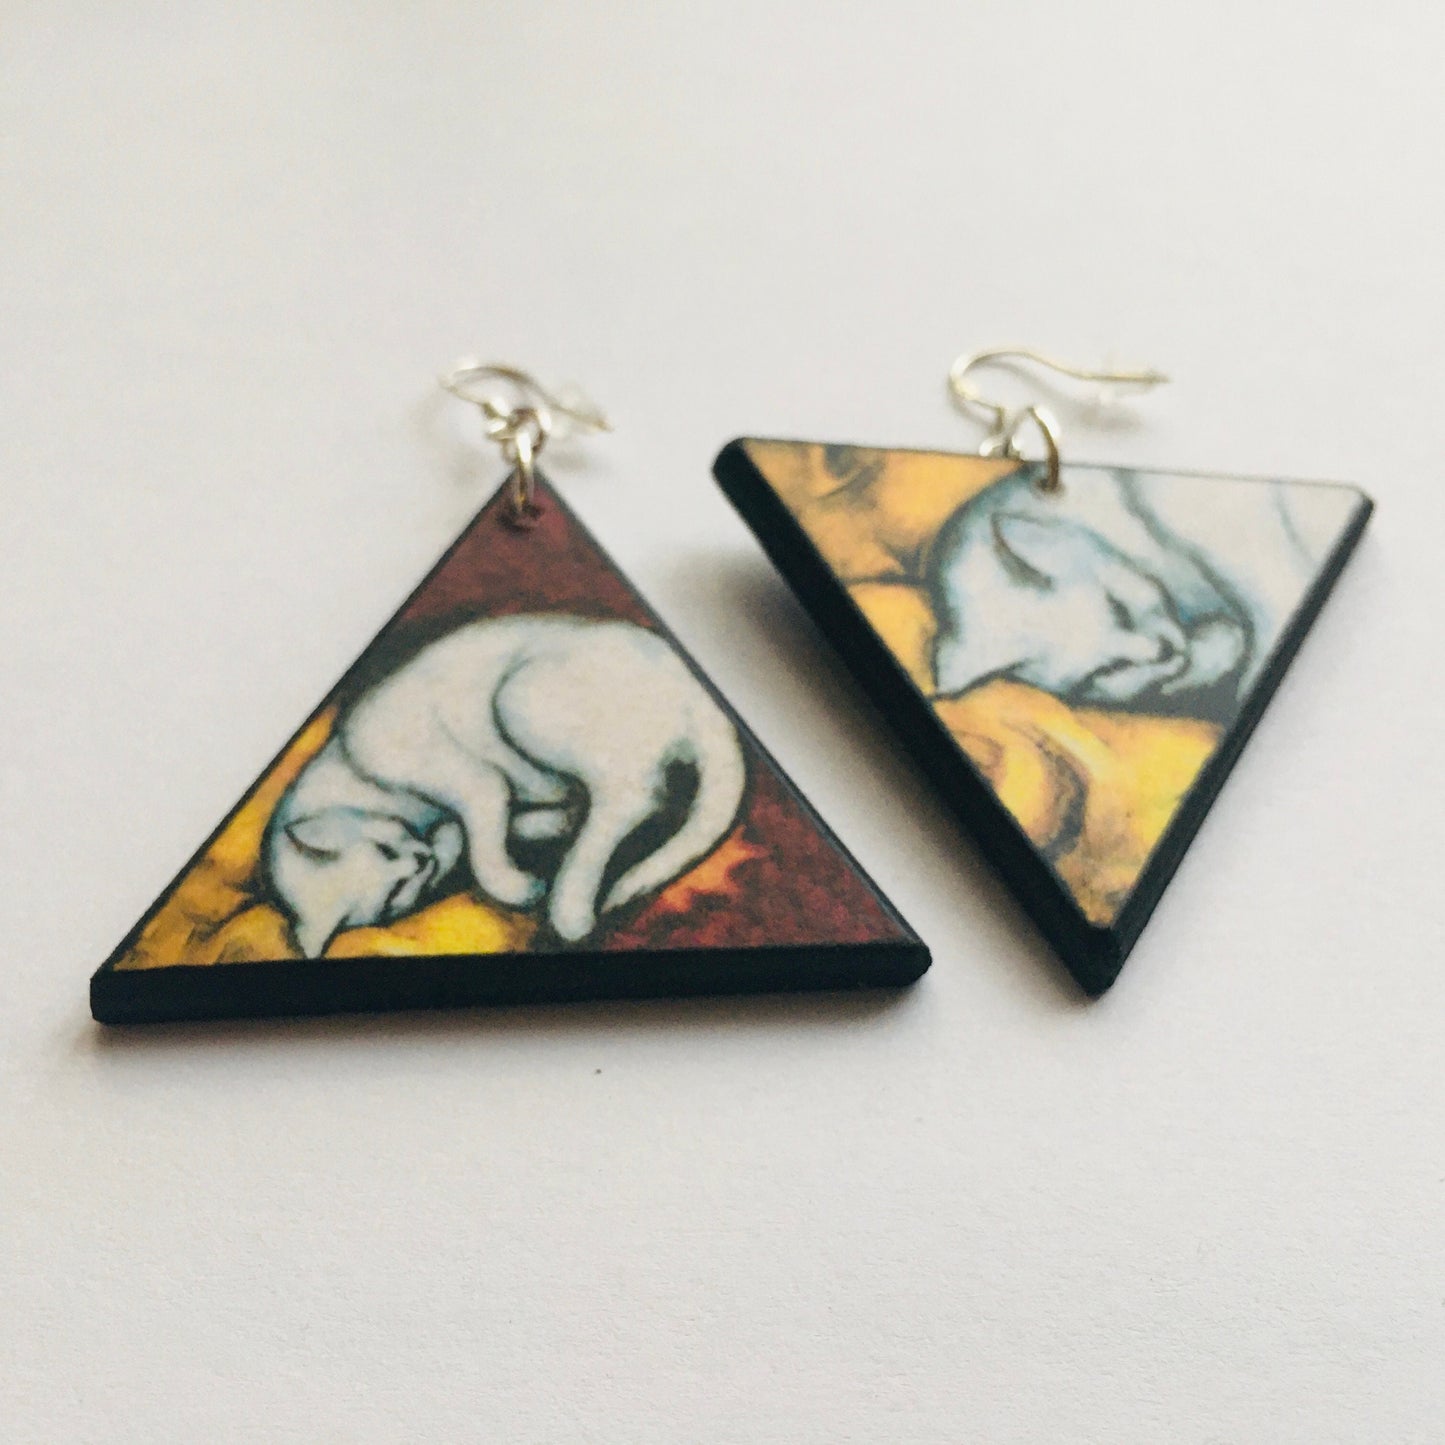 Triangle earrings, wood and sterling earrings. Cat earrings gift for her.